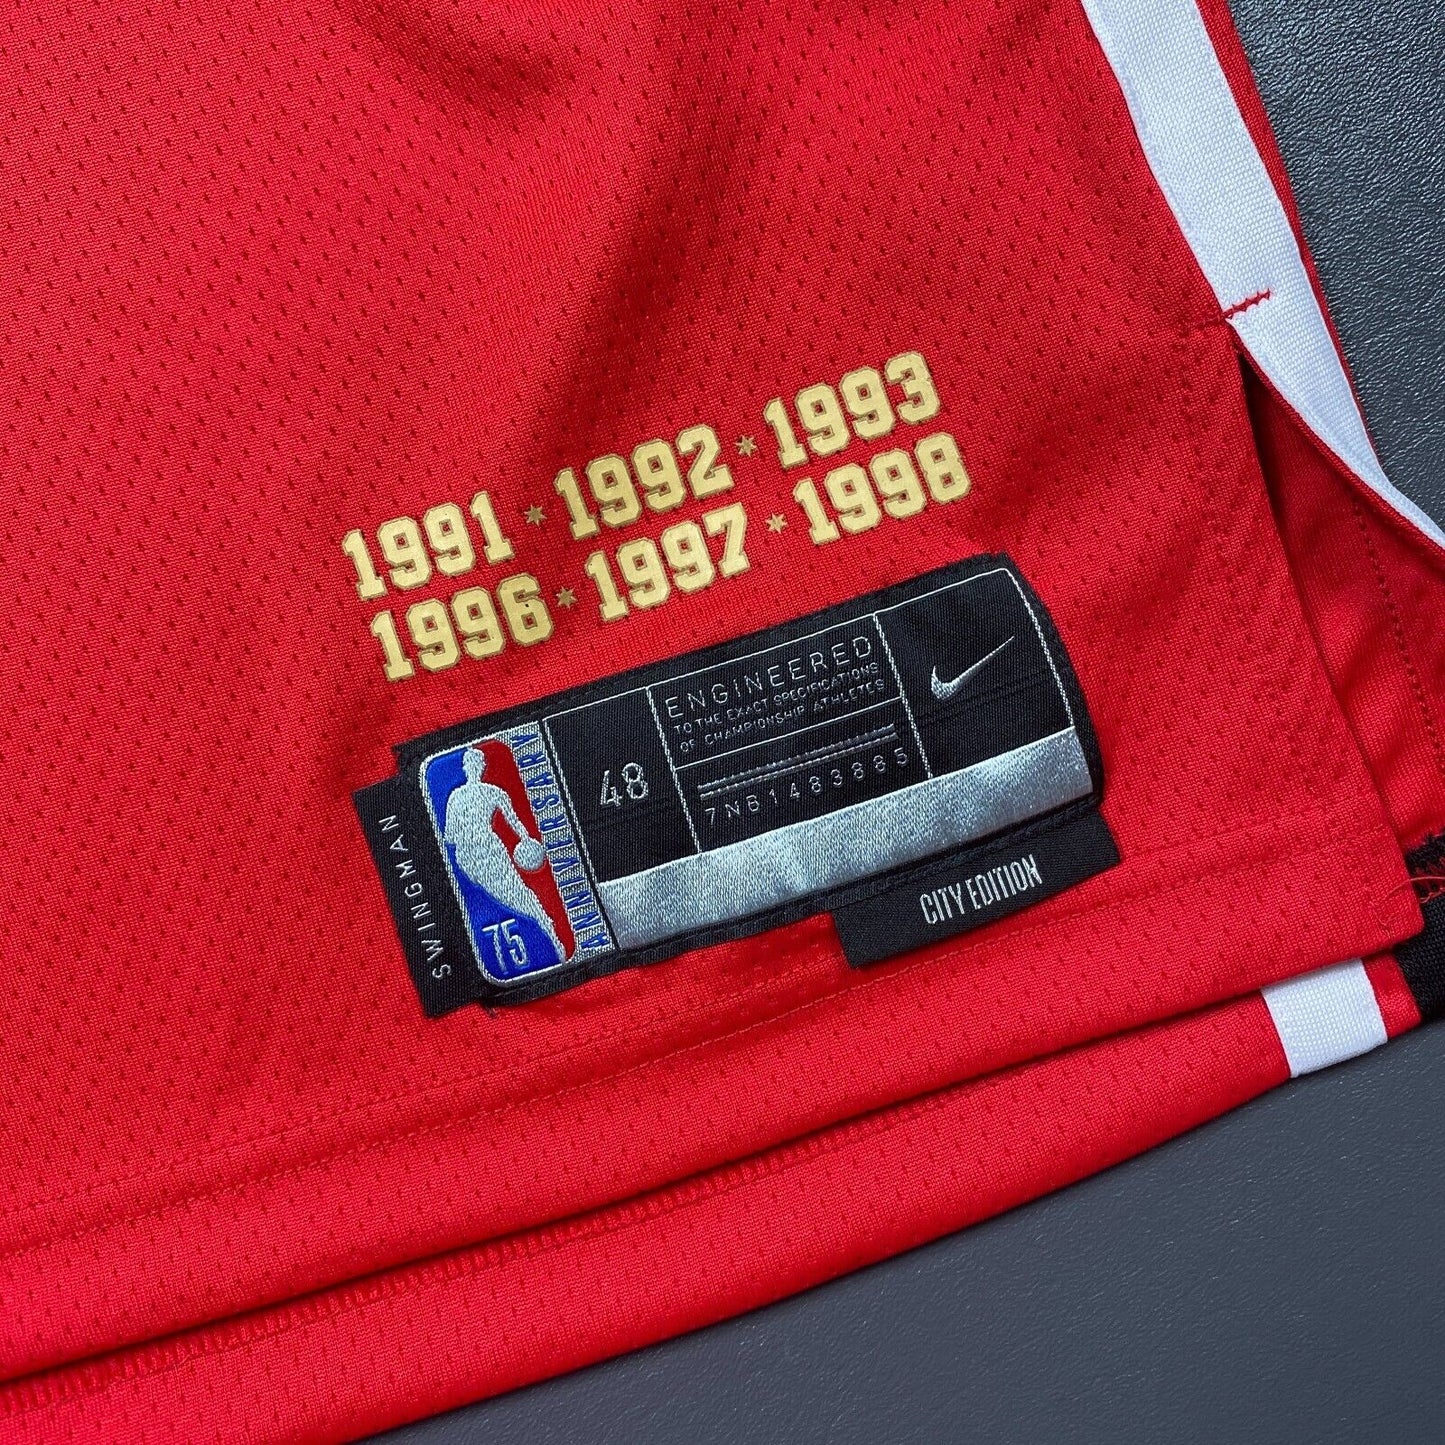 100% Authentic Zach Lavine Nike NBA 75th Bulls City Edition Jersey Size 48 L